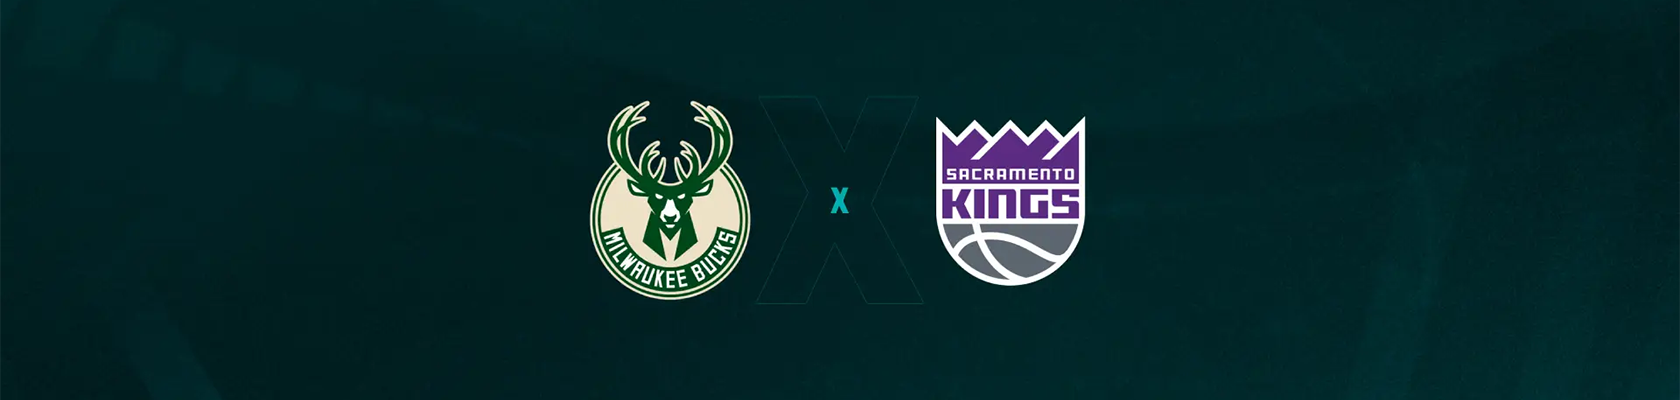 Milwaukee-Bucks-x-Sacramento-Kings